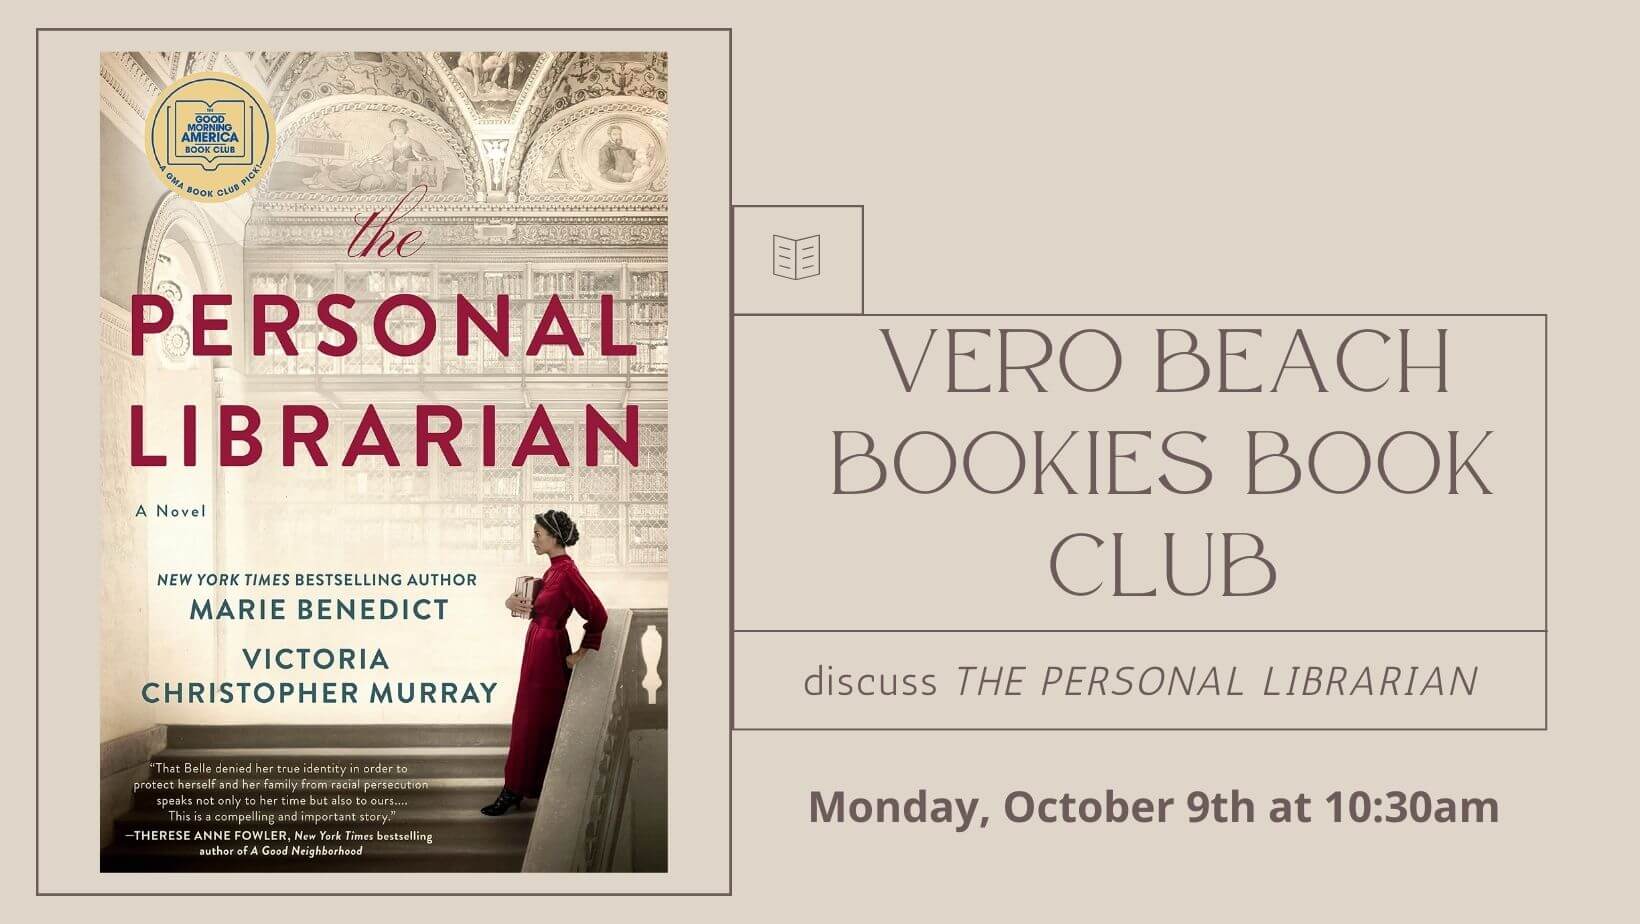 Vero Beach Book Club discusses The Personal Librarian